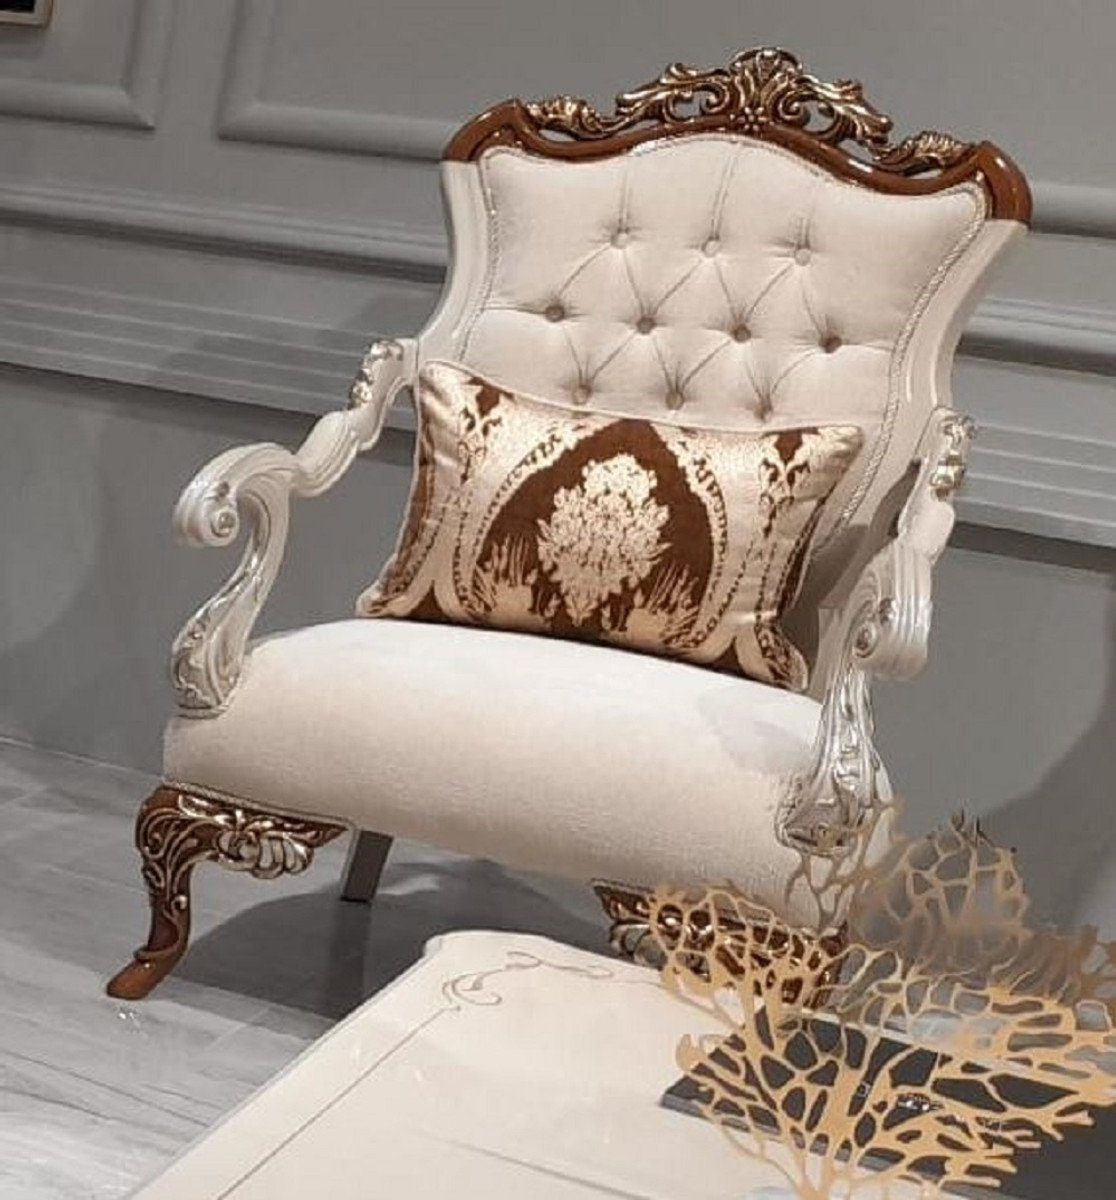 Casa Padrino Sessel Luxus Barock Sessel Beige / Grau / Braun / Gold - Handgefertigter Barockstil Wohnzimmer Sessel - Barock Wohnzimmer Möbel - Edel & Prunkvoll